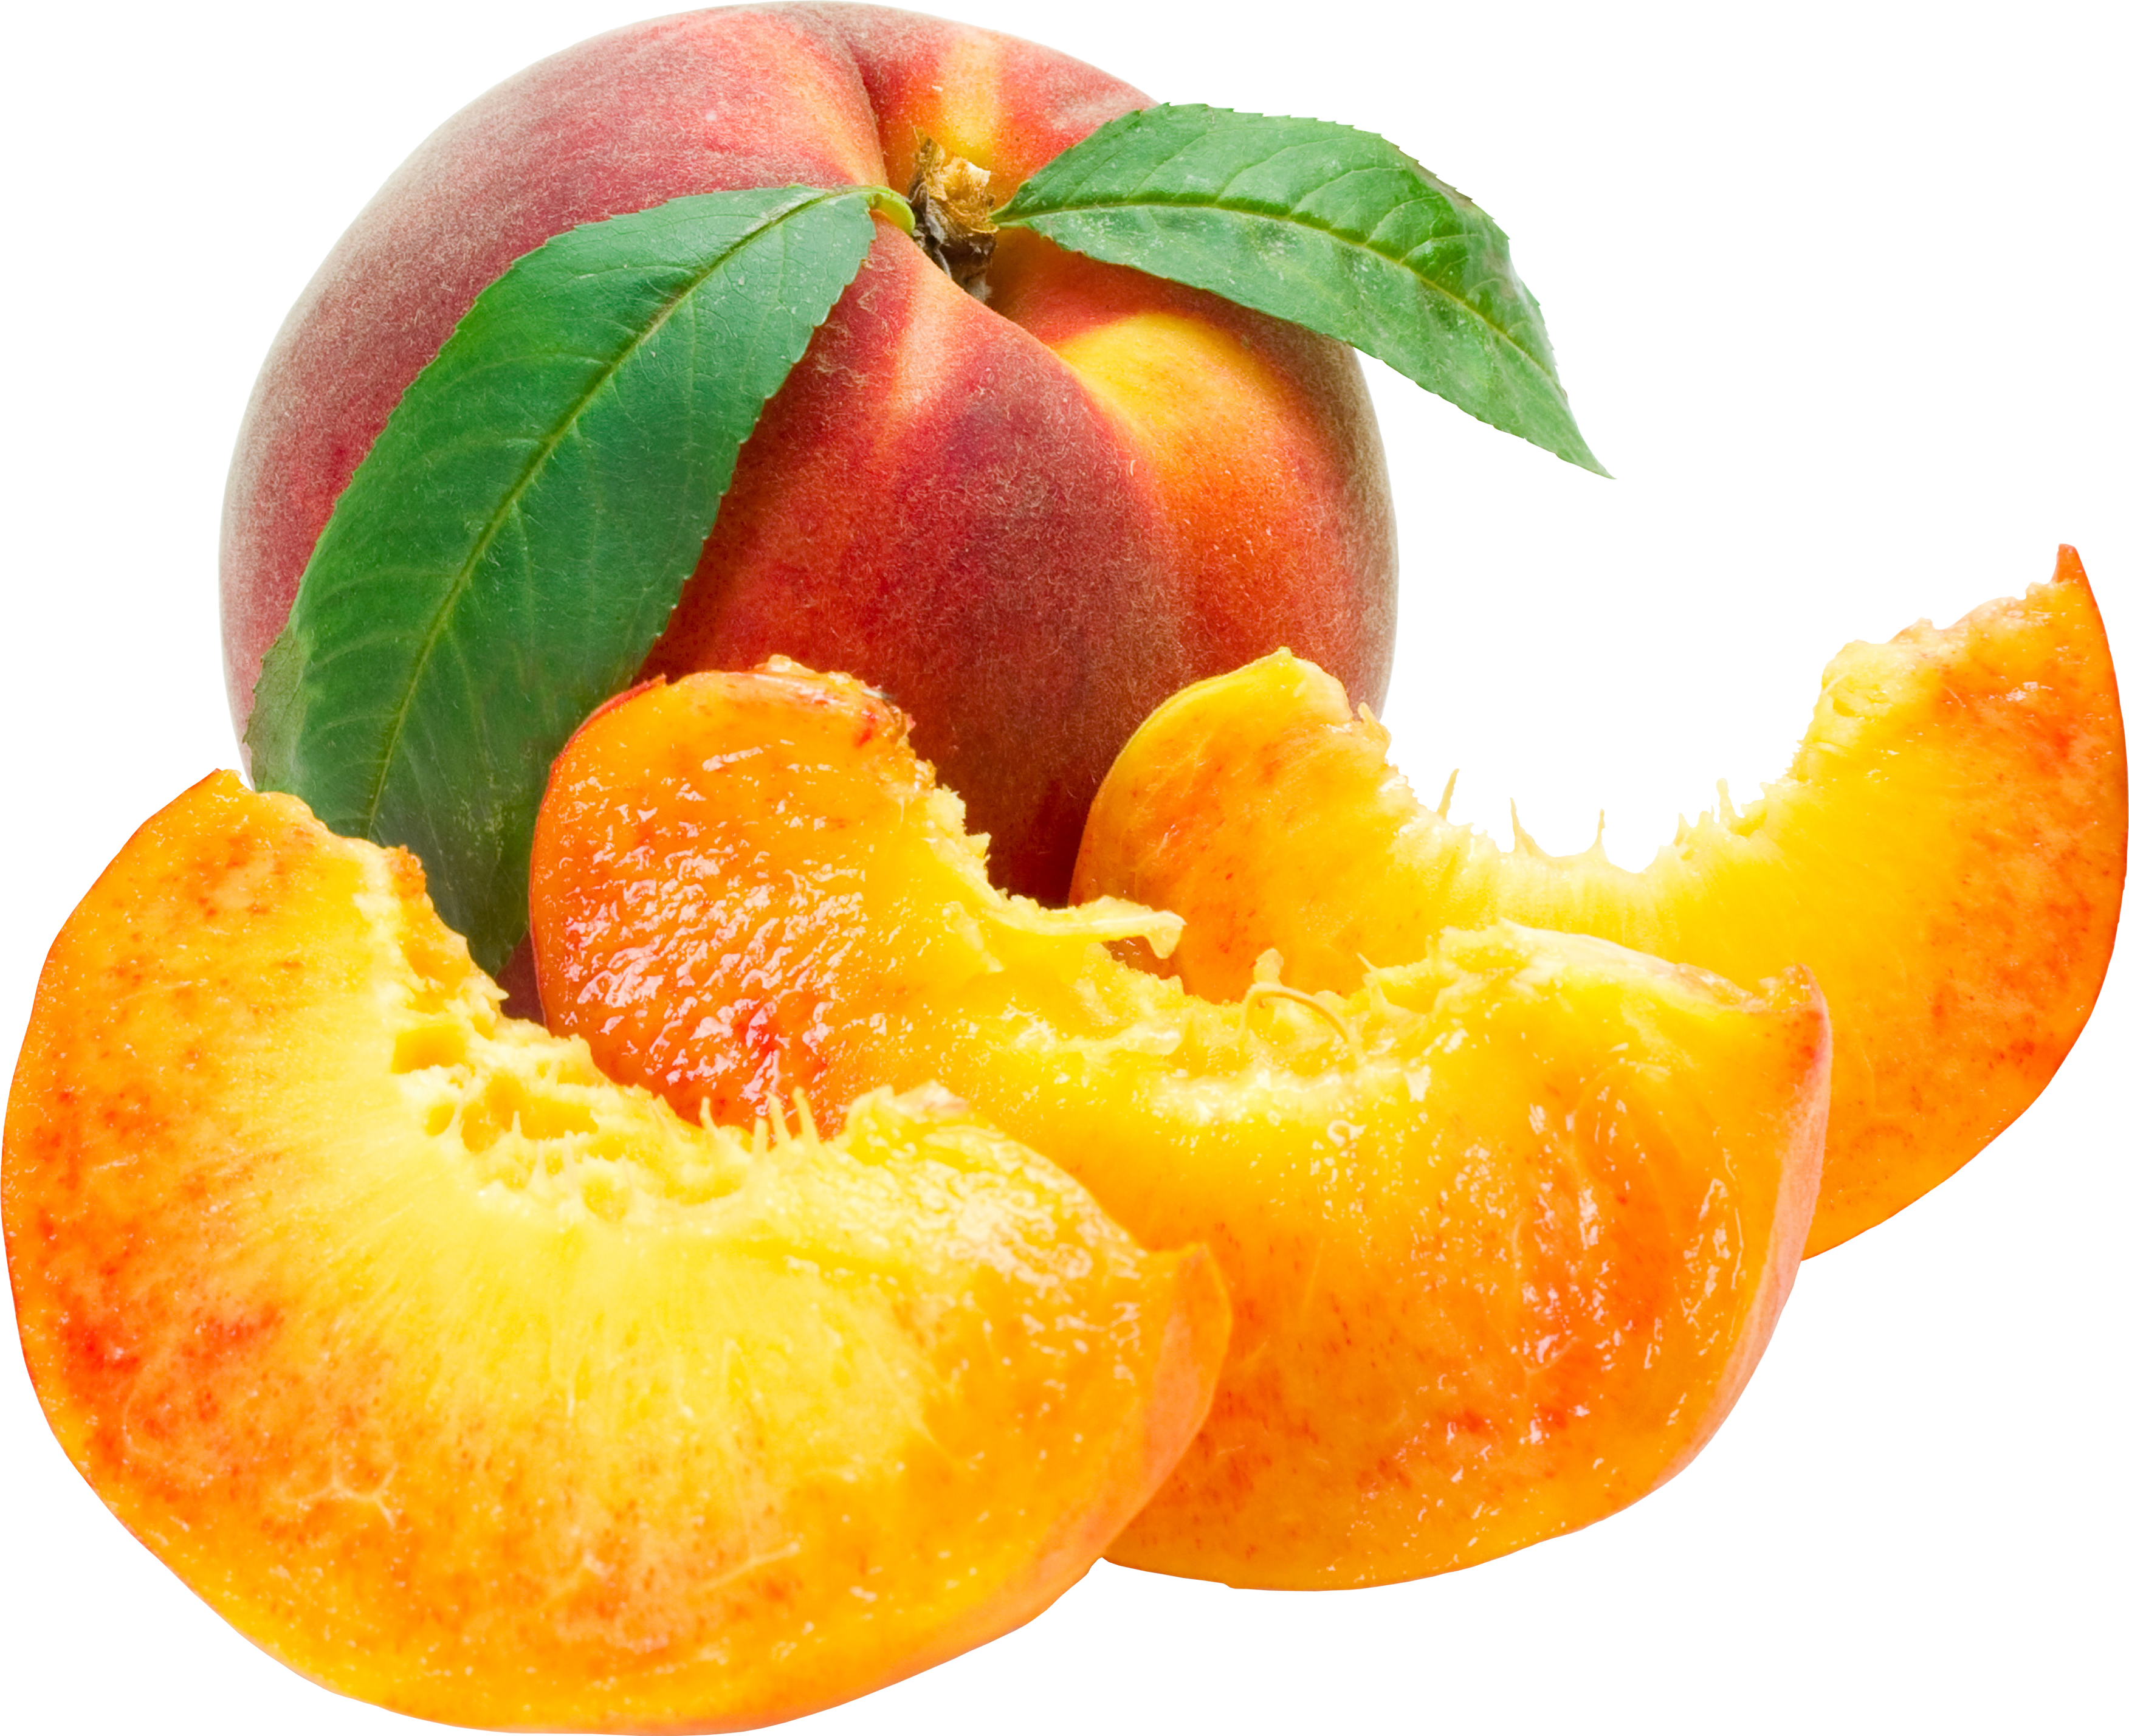 Peach Slice Png Truly Peach i